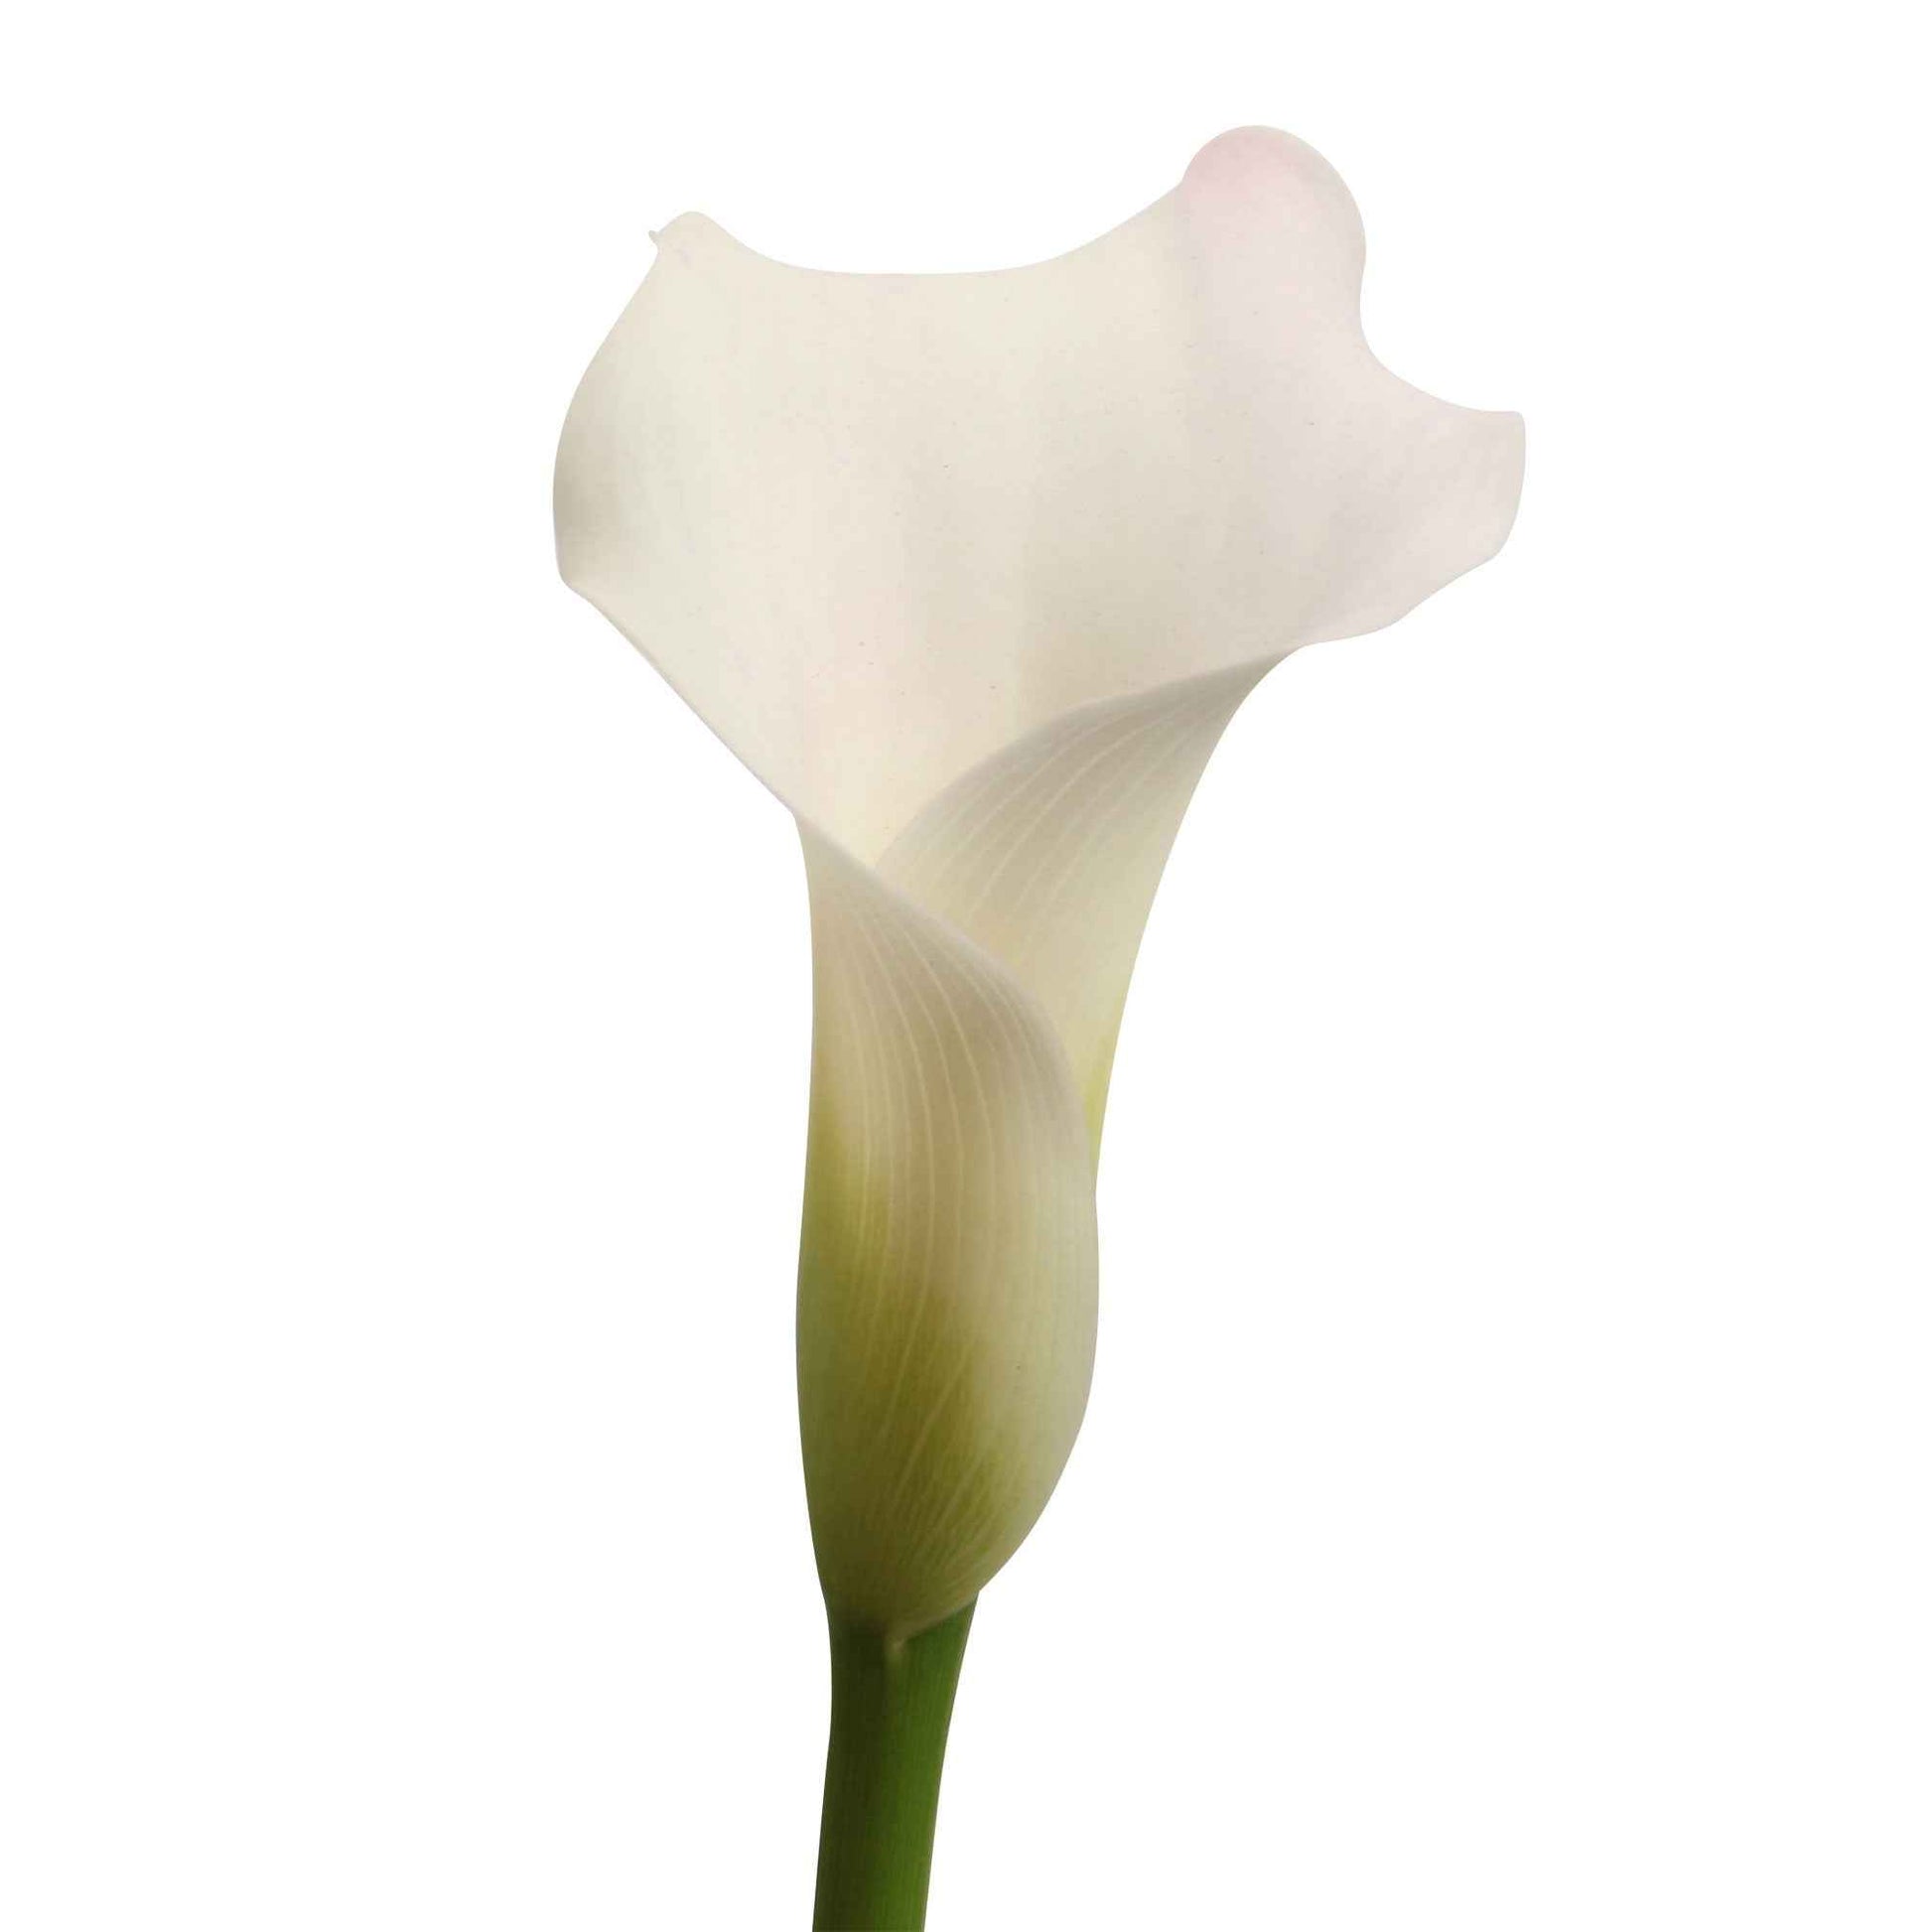 Arum Zantedeschia 'Chrystal Blush' blanc - Bulbes de fleurs en pot